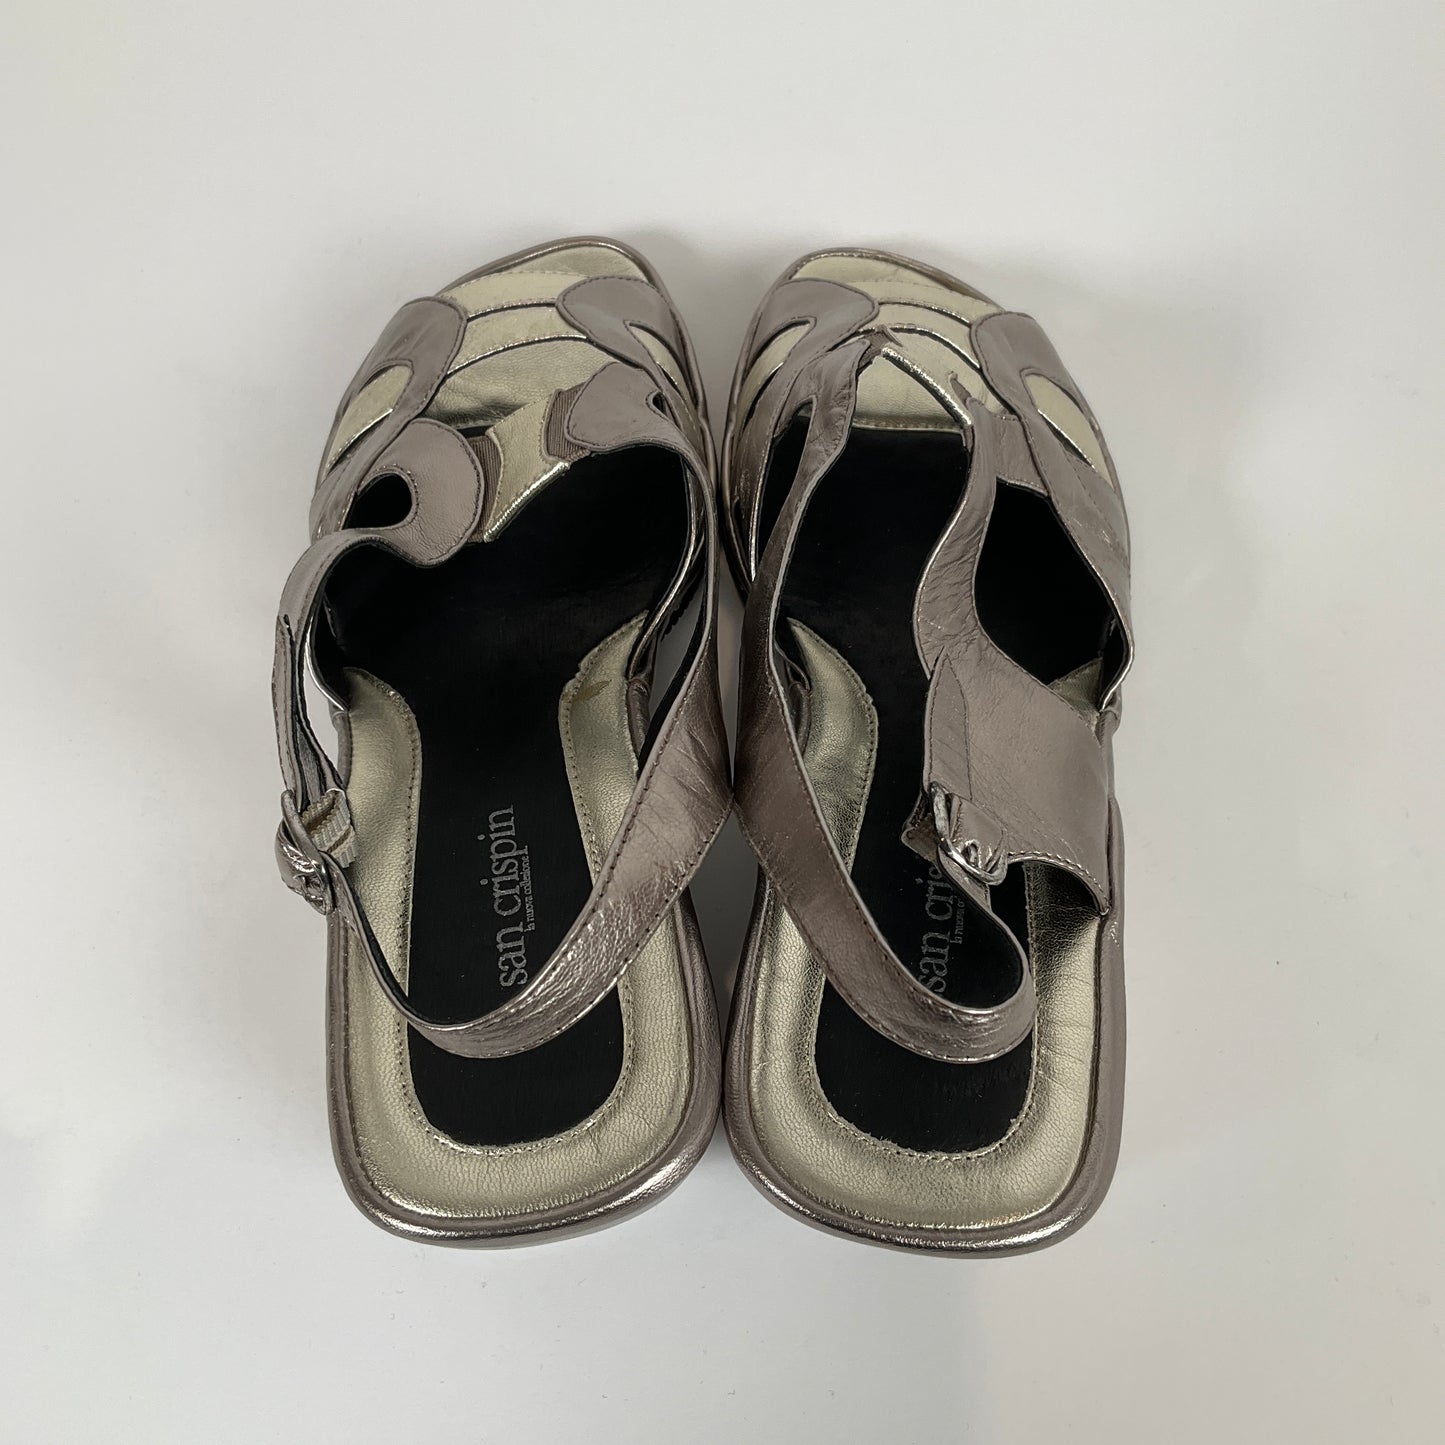 San Crispin - Sandals - Size 39